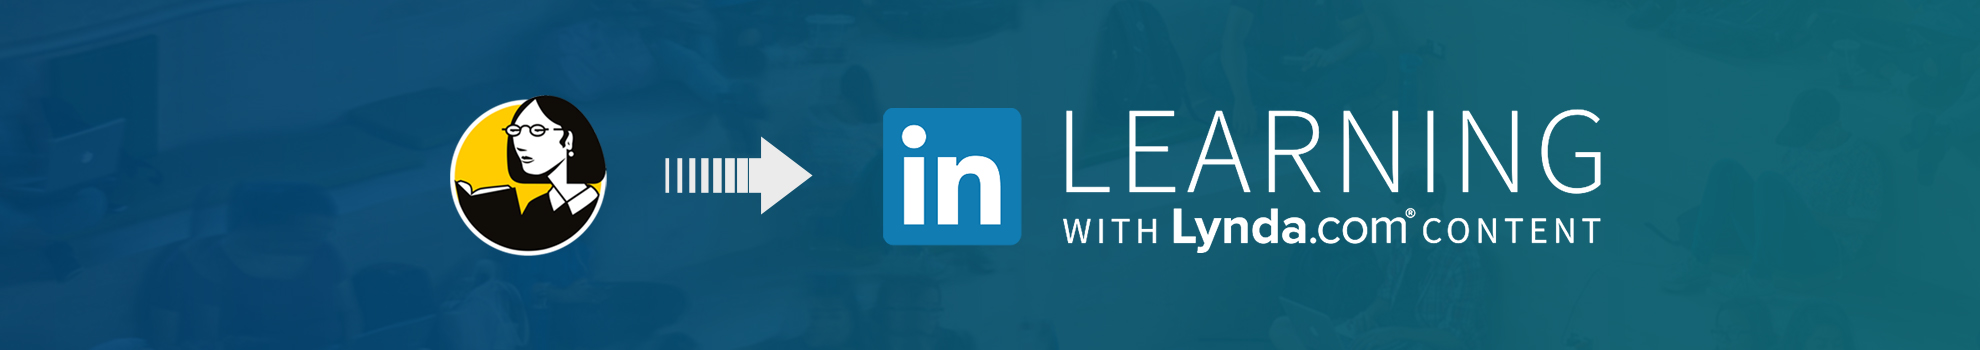 Lynda becomes LinkedIn Learning